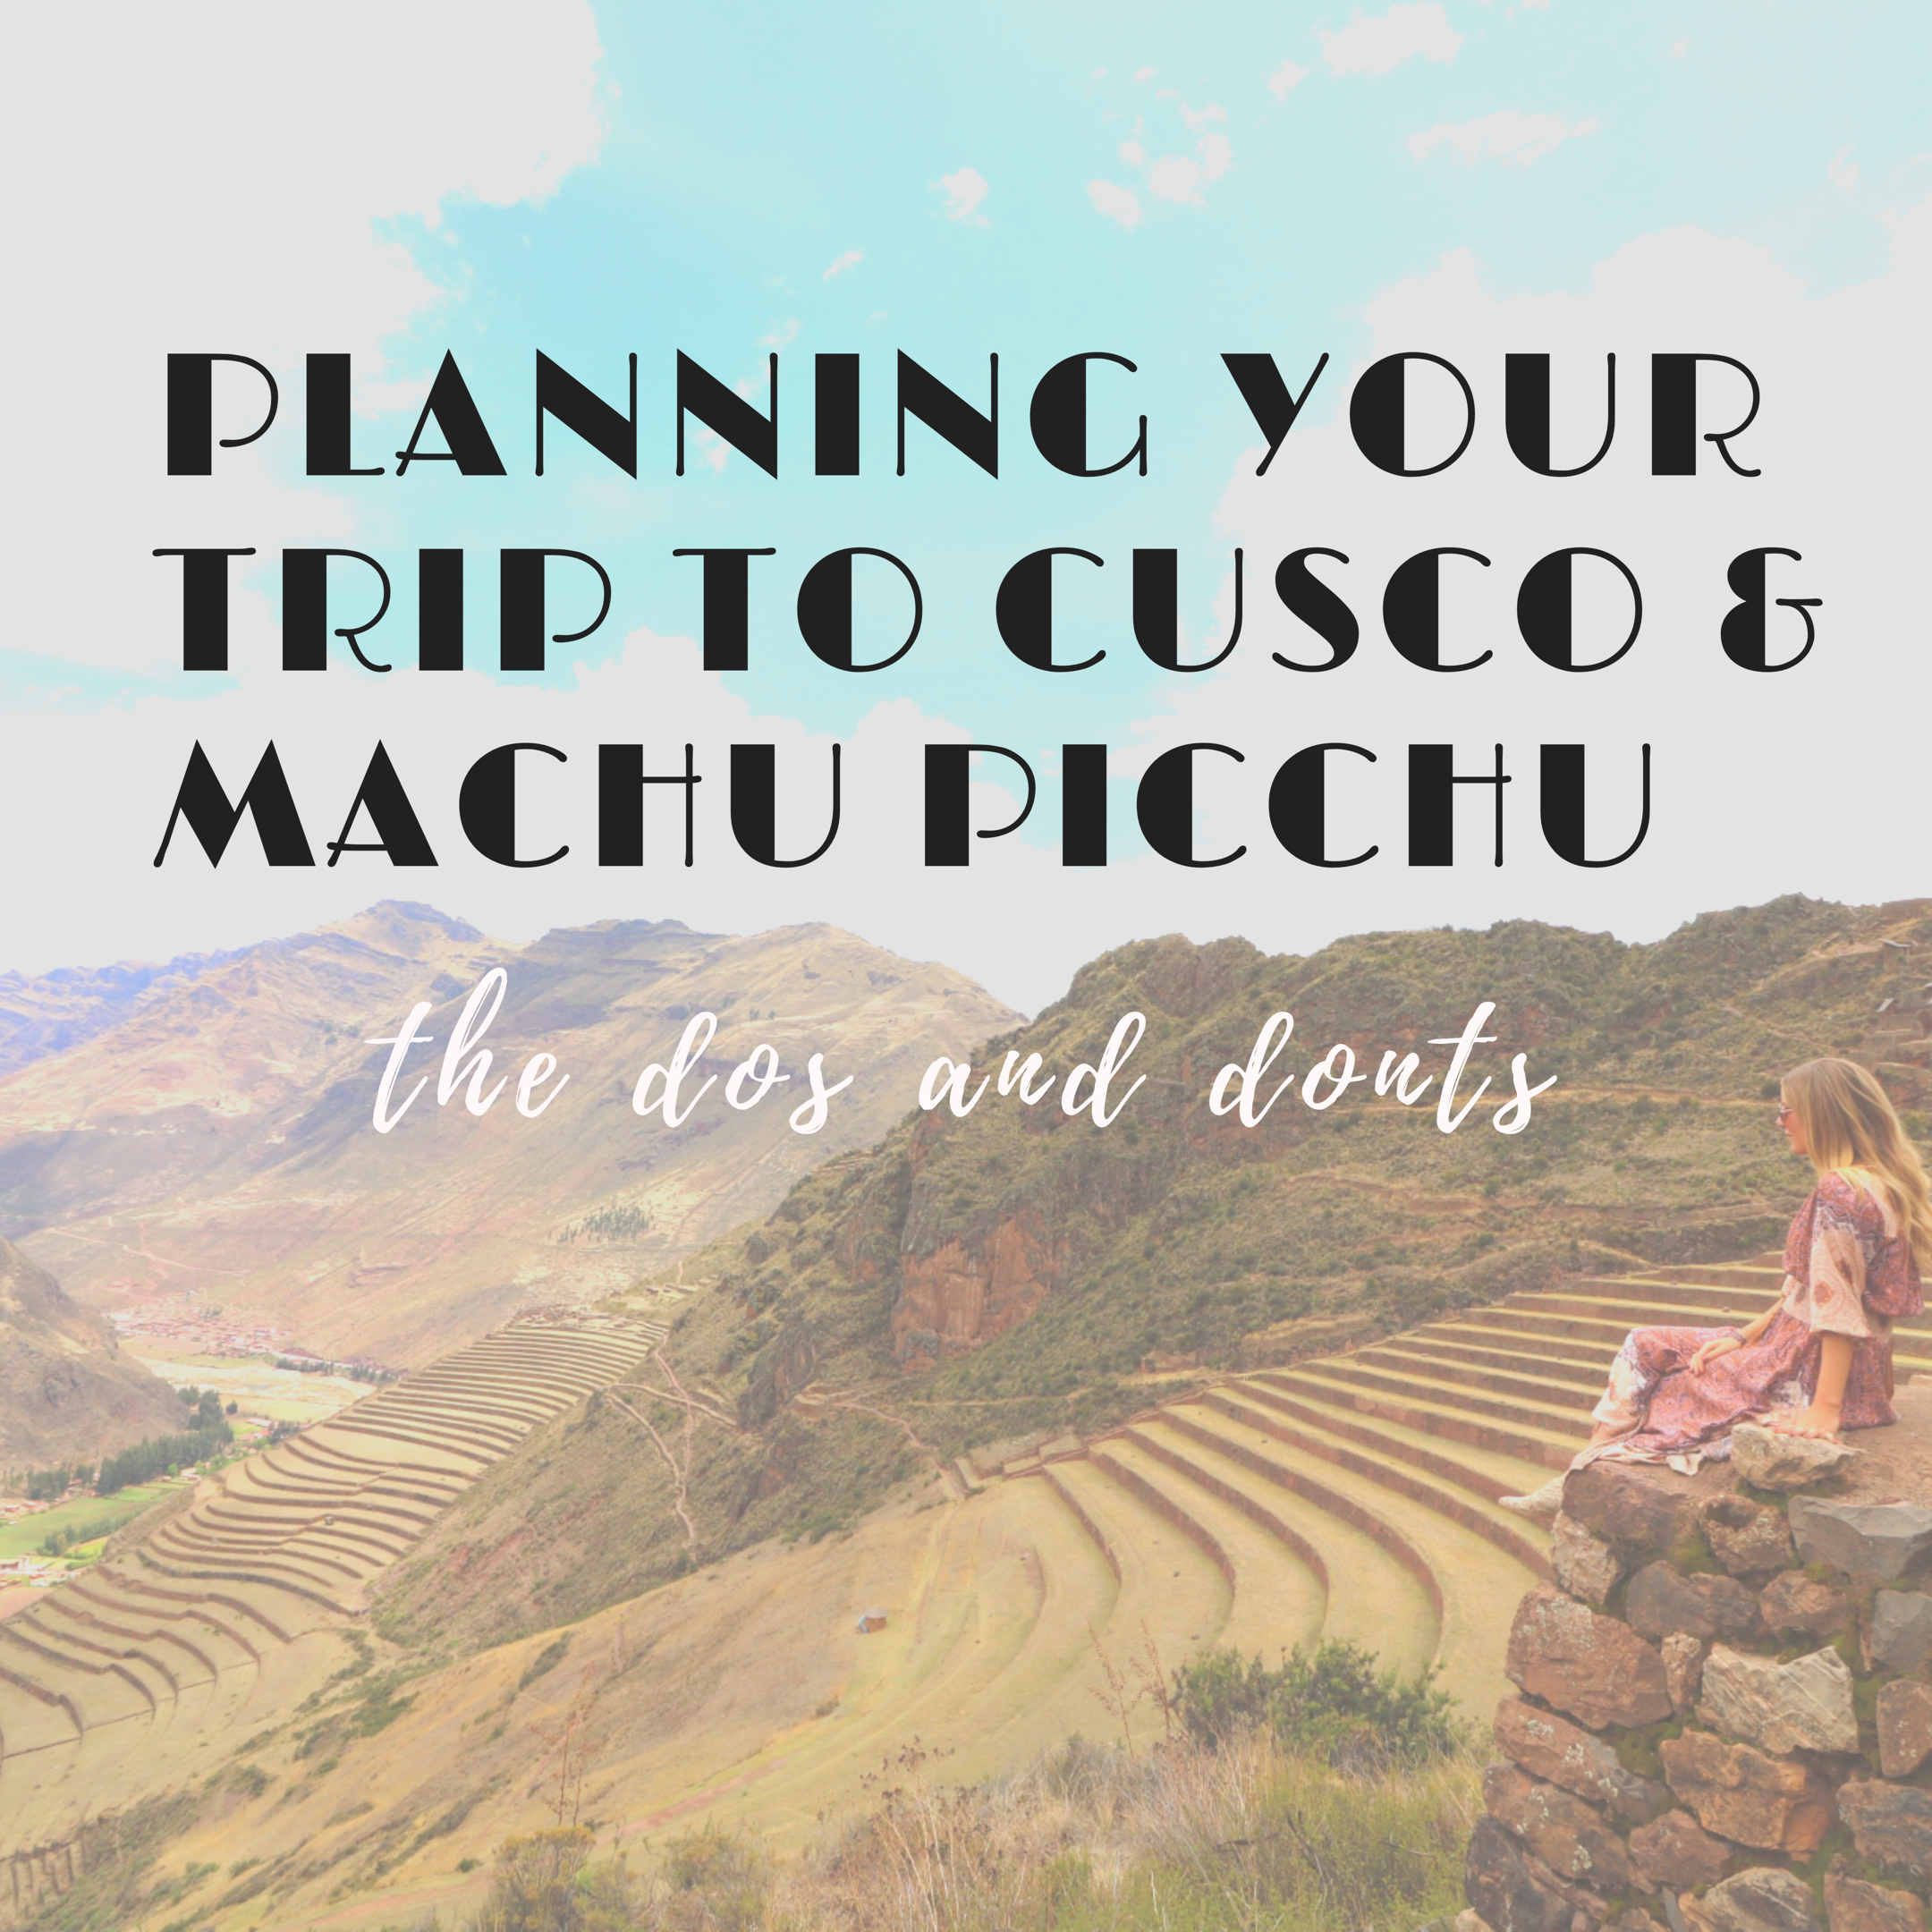 cusco planning tips